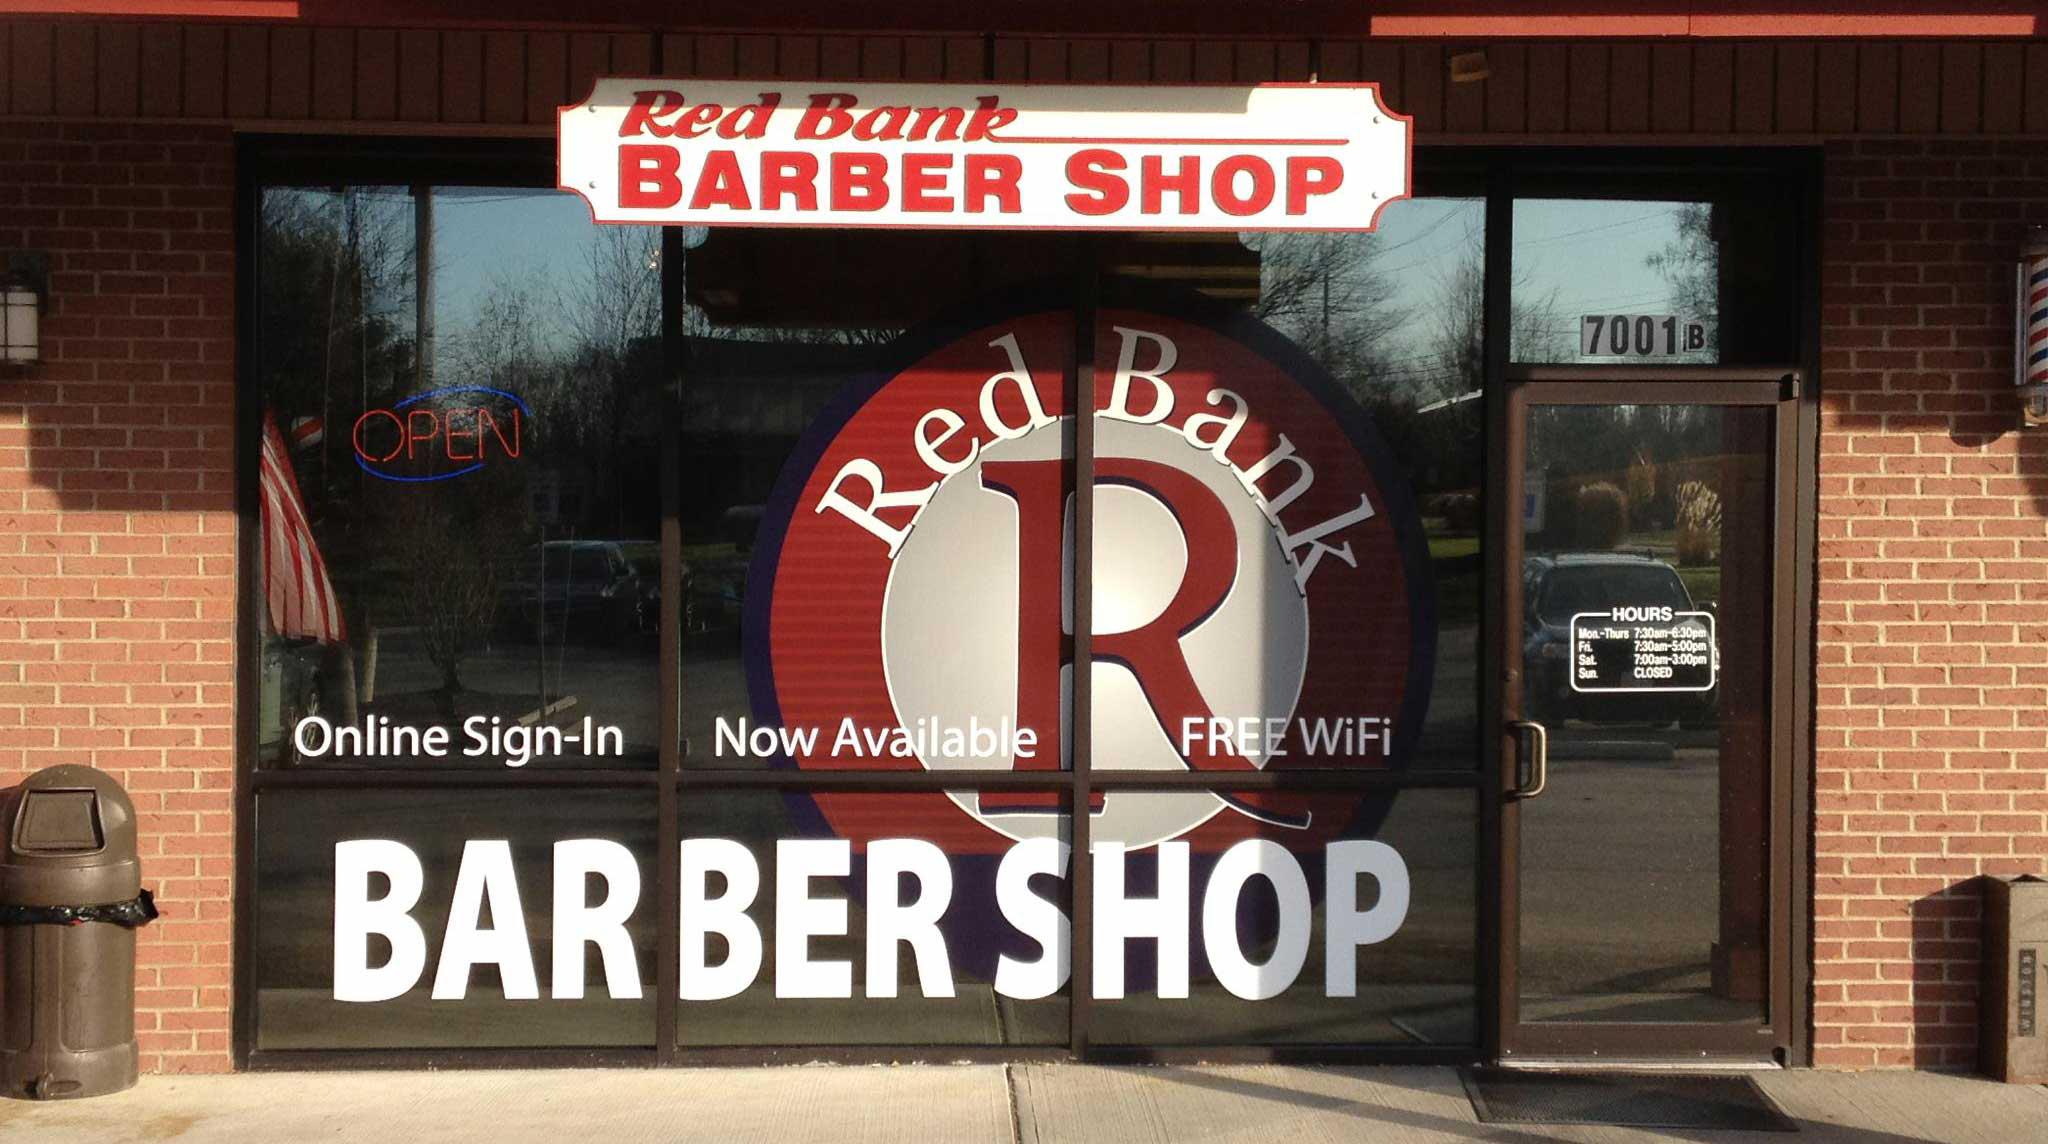 Red Bank Barber Shop Photo